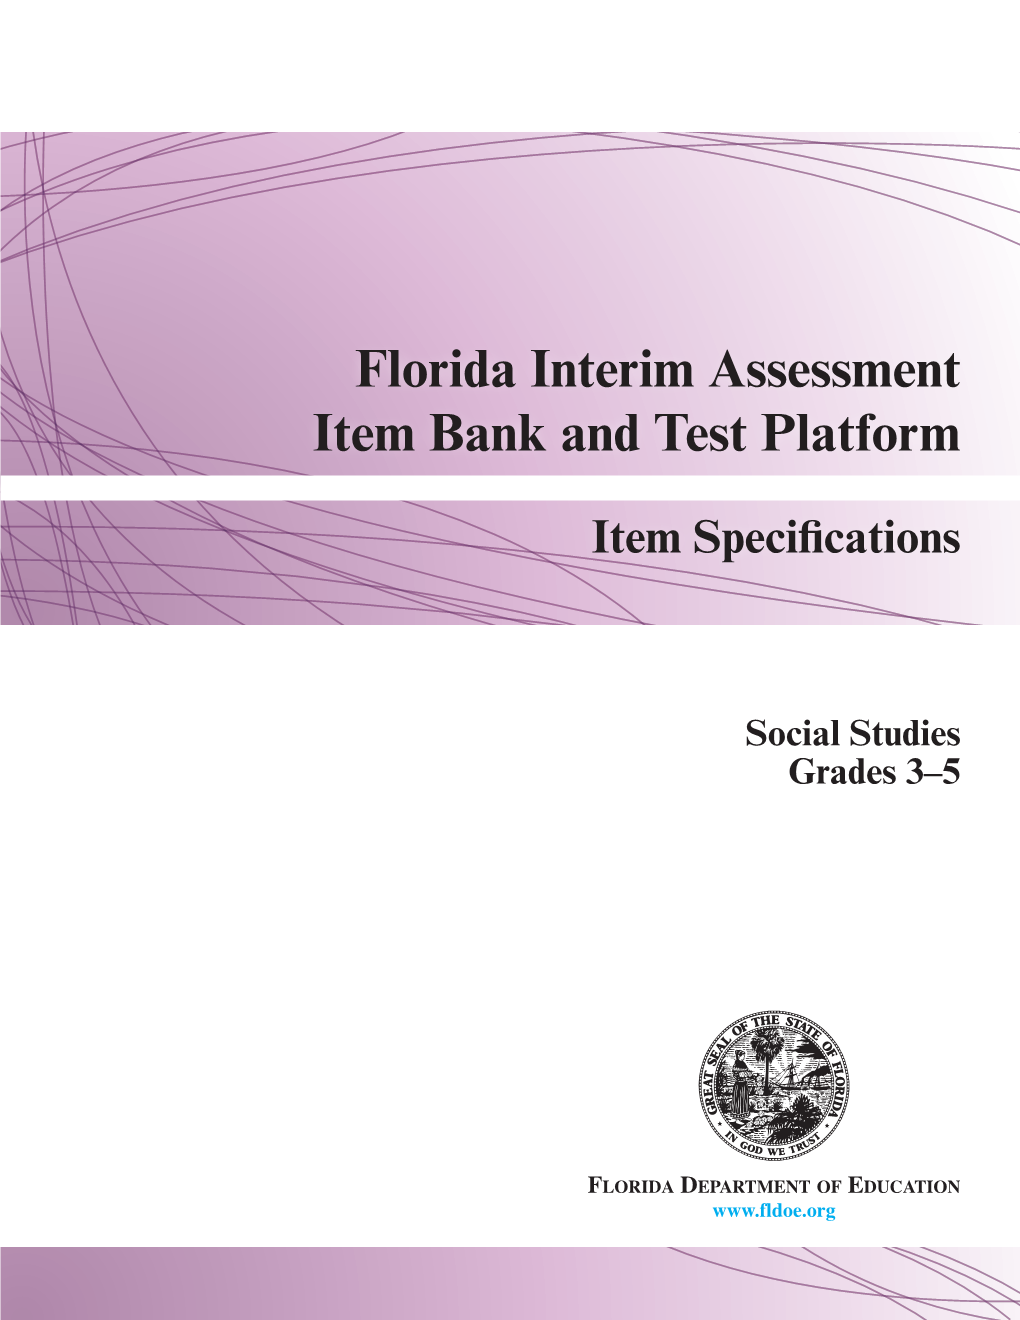 Florida Interim Assessment Item Bank and Test Platform Item Specifications